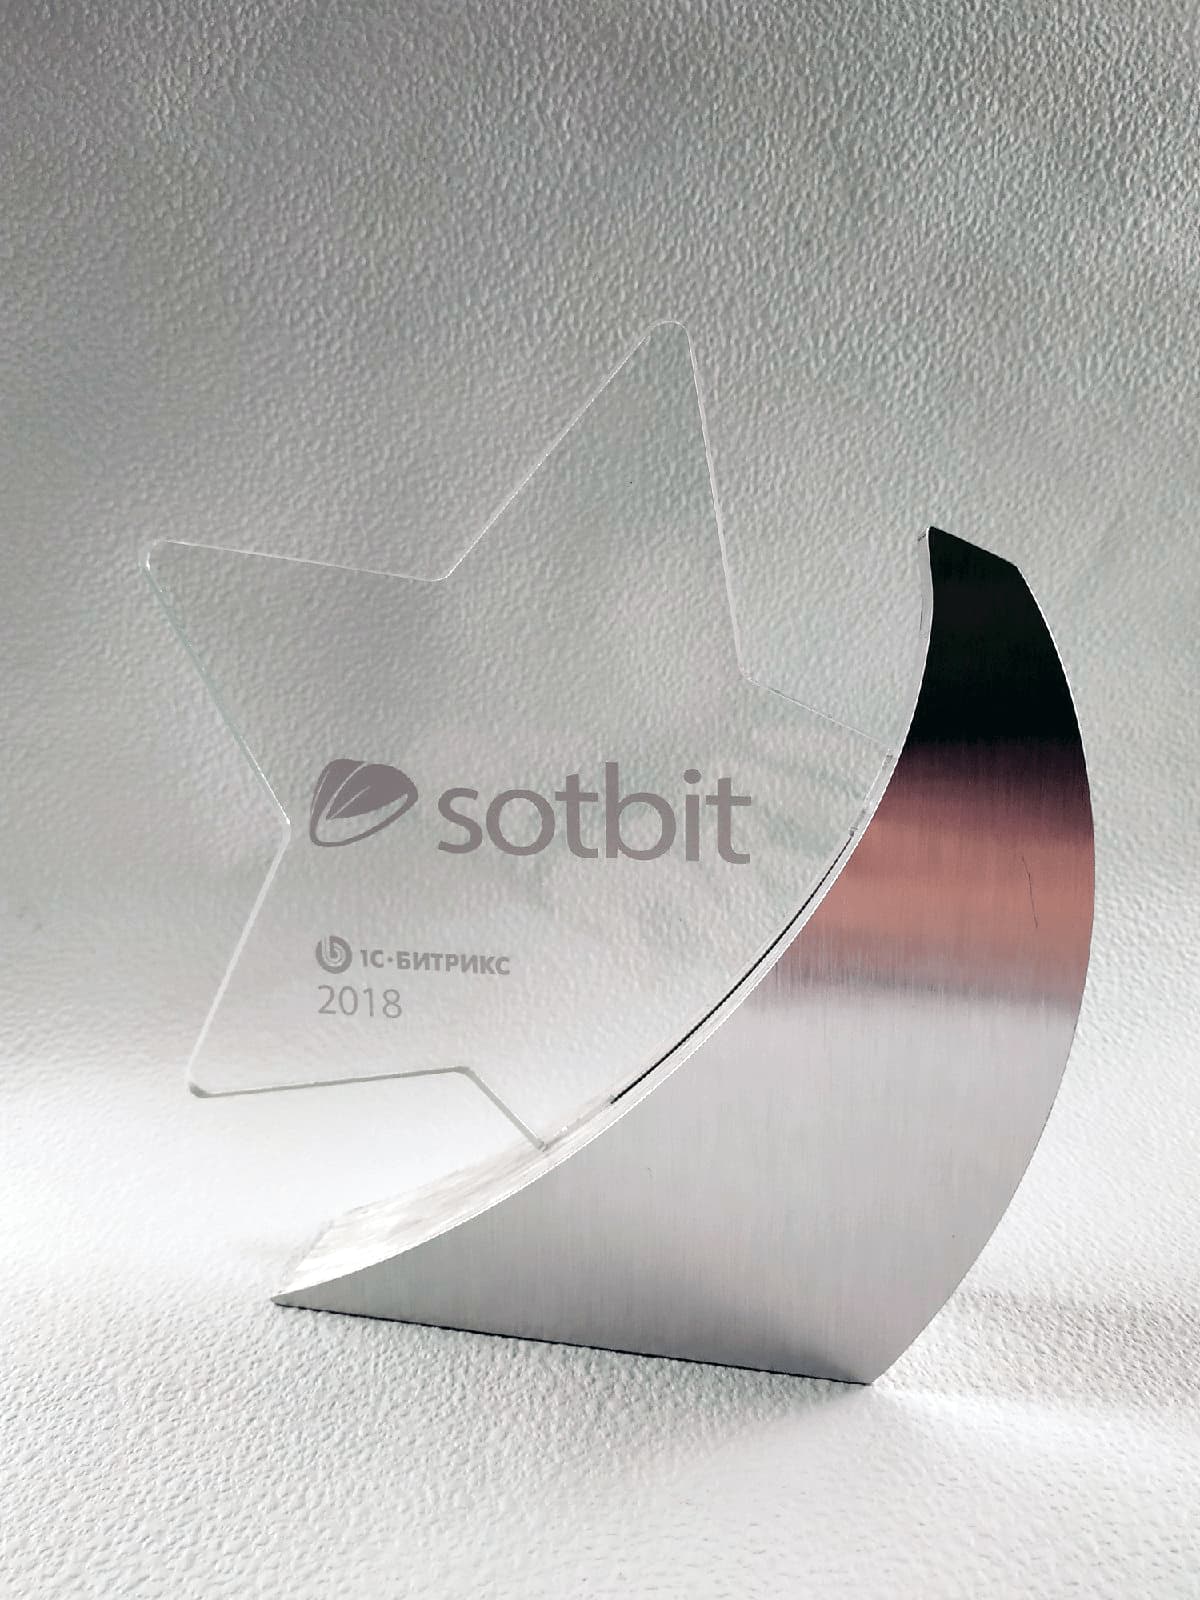 Награды Сотбит от 1С-Битрикс